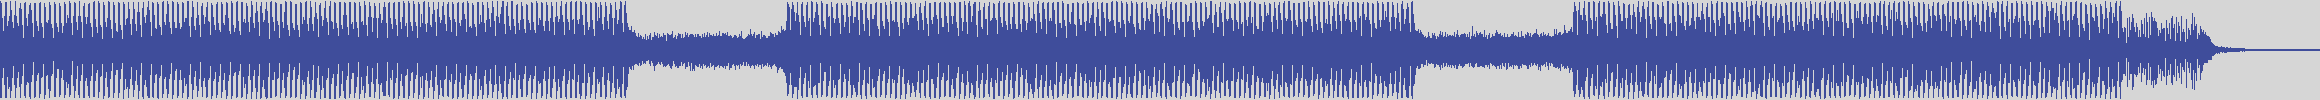 nf_boyz_records [NFY024] Team De Luxe - Absolom [Original Mix] audio wave form